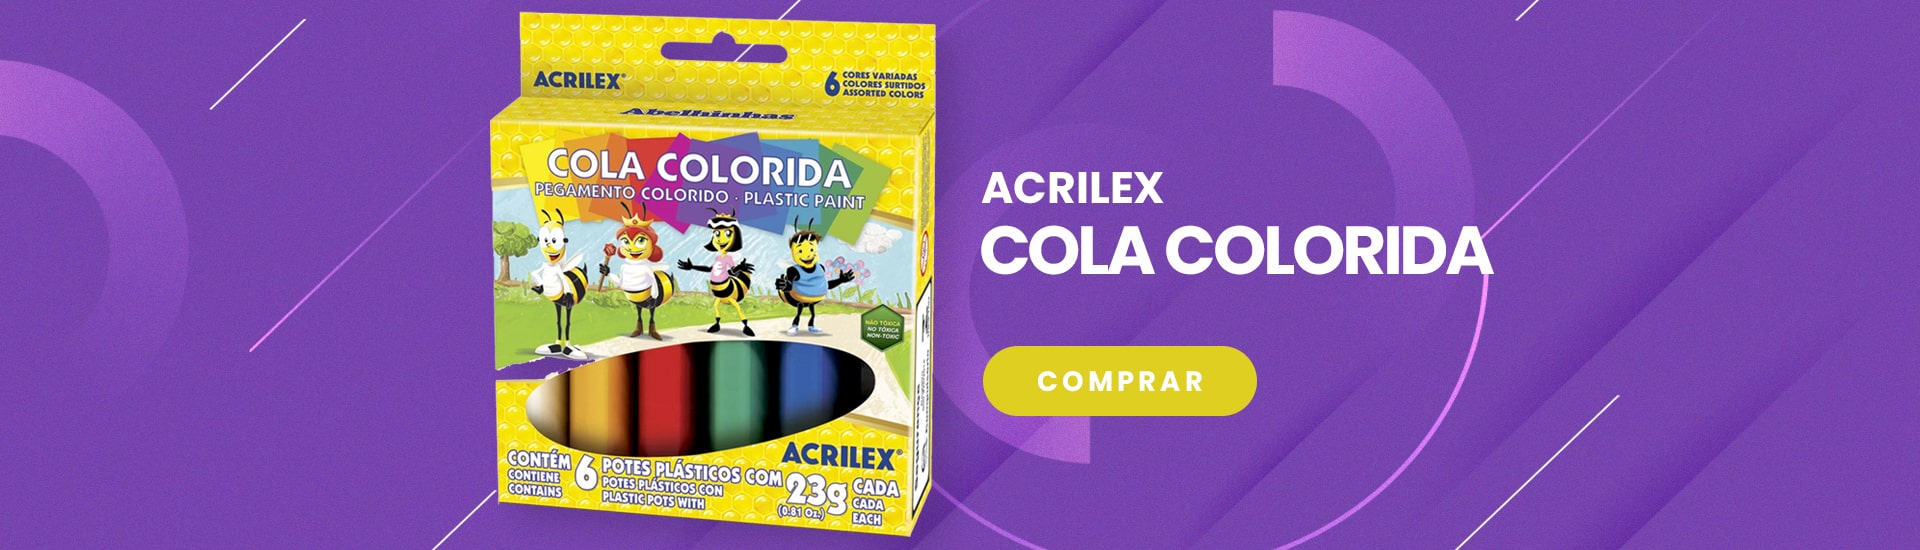 Cola Colorida com 6 cores Acrilex